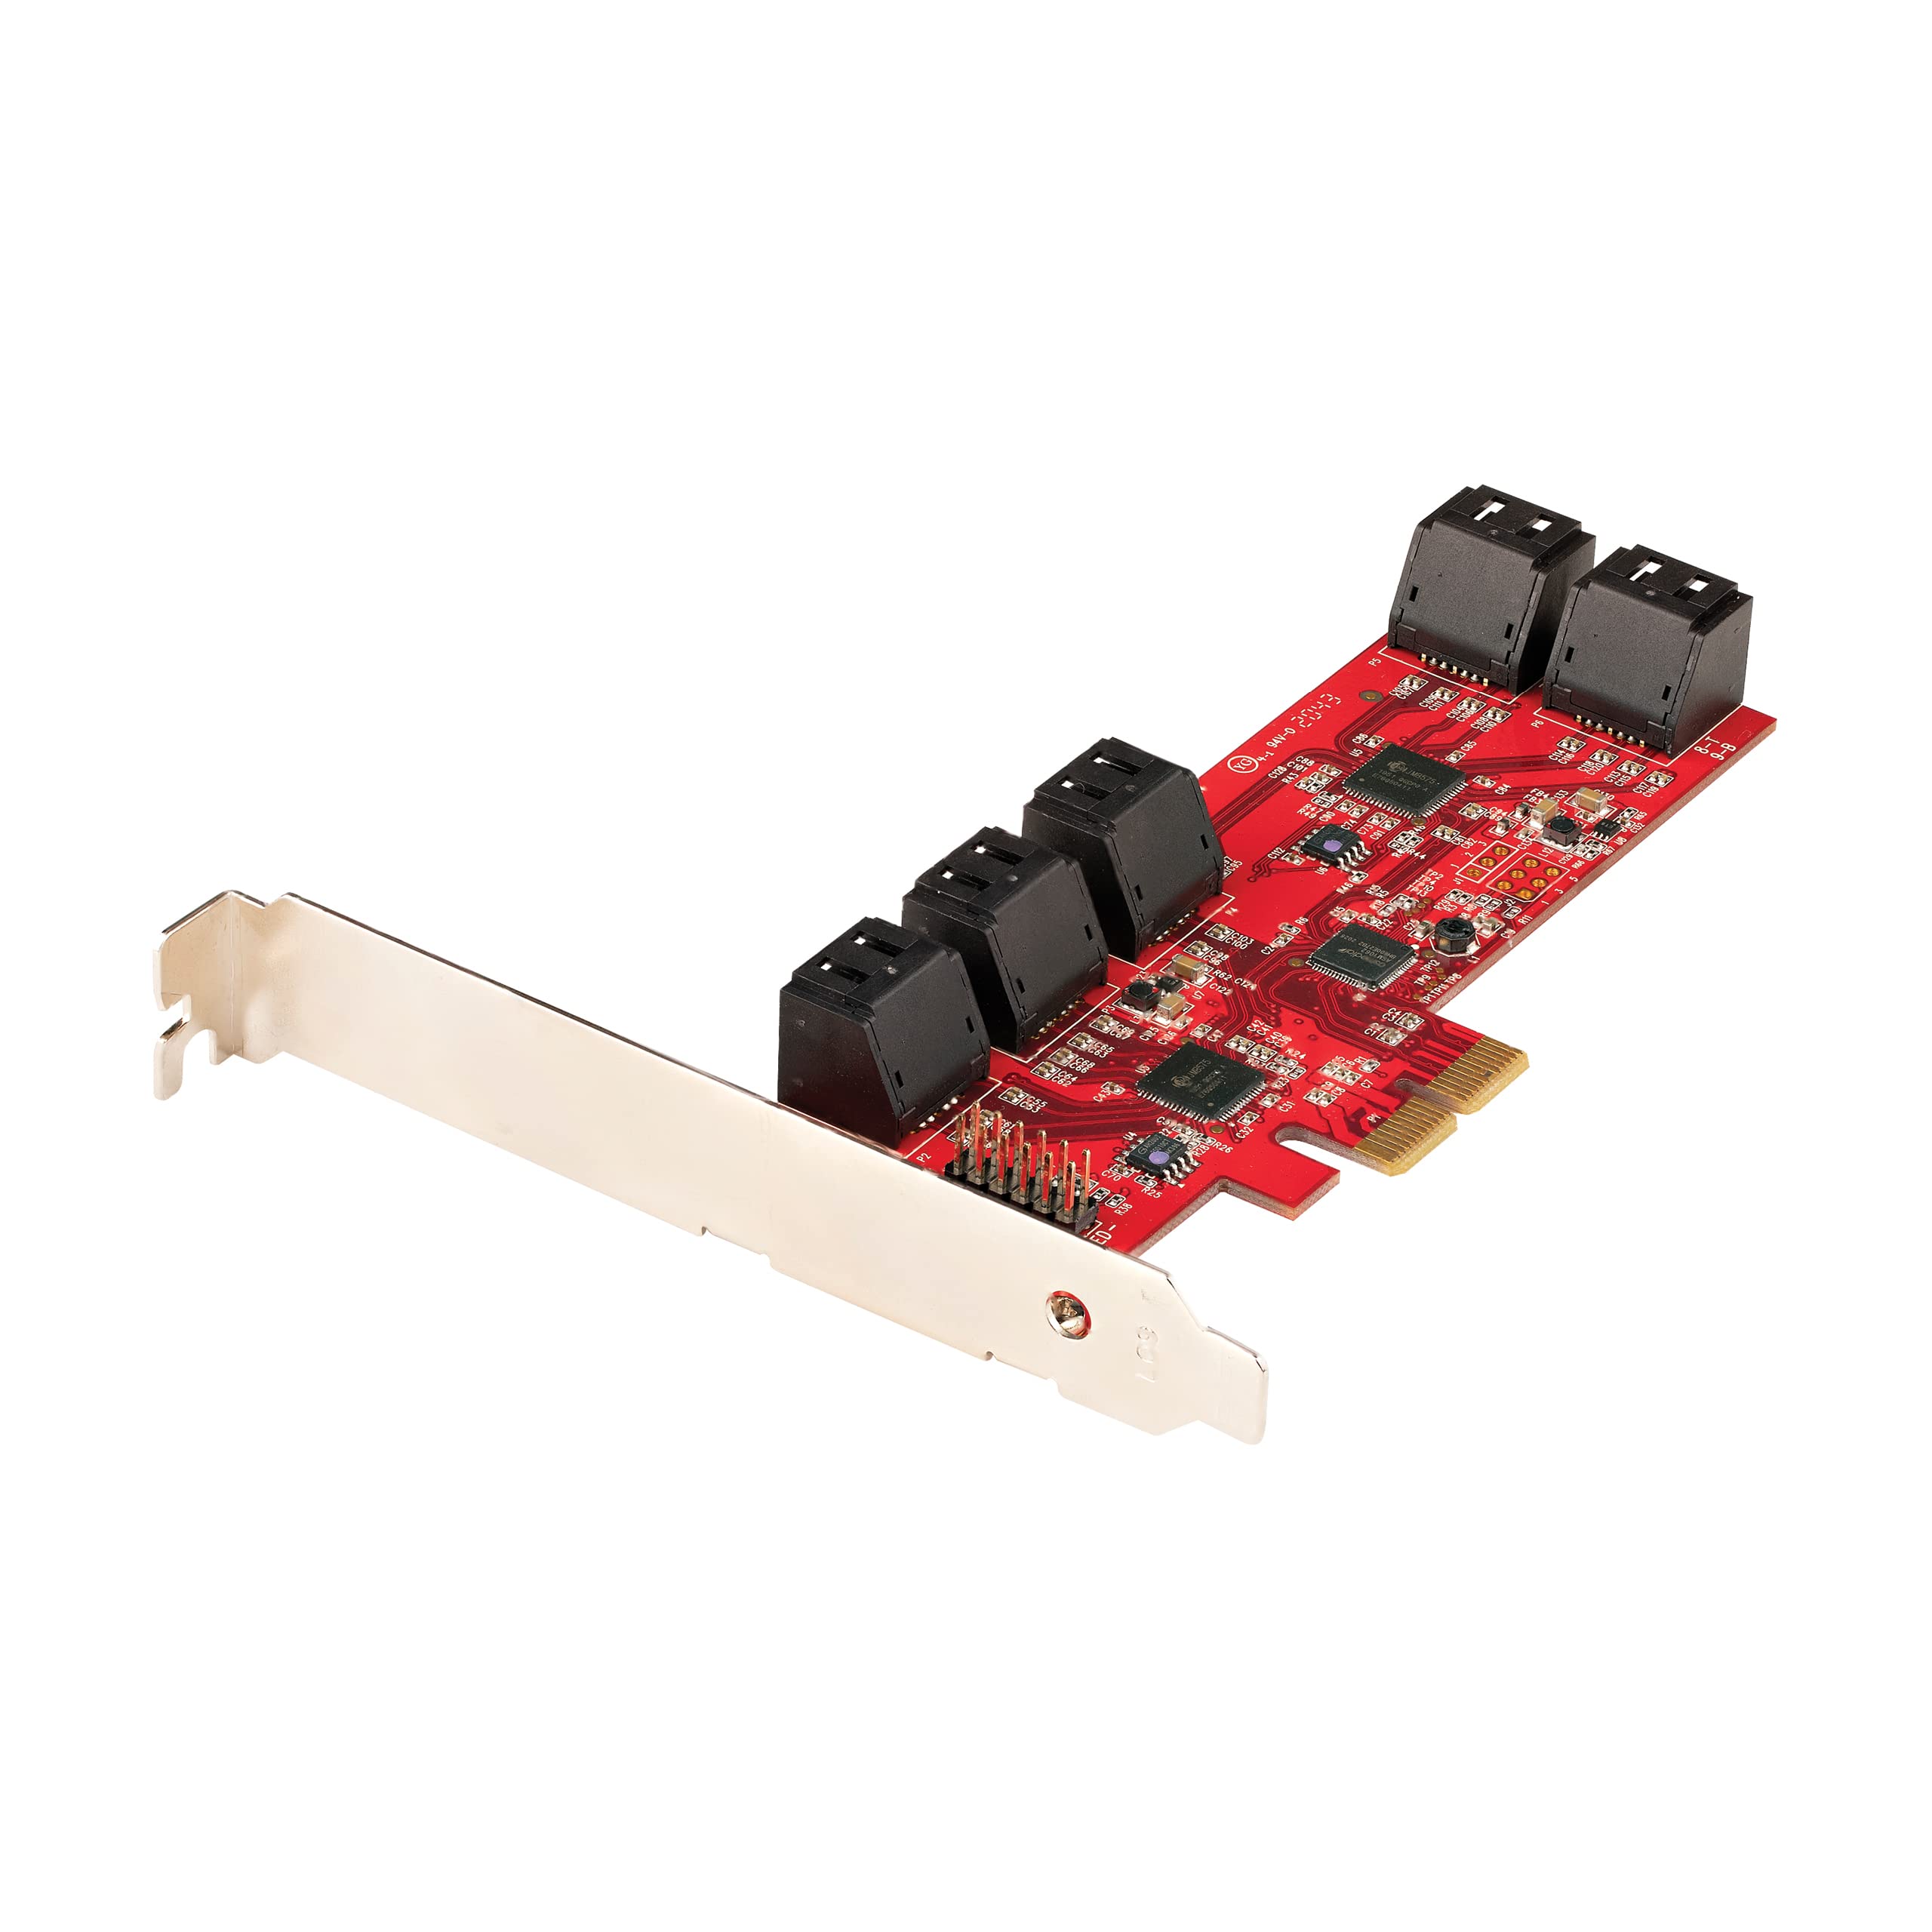 StarTech.com SATA PCIe Card - 10 Port PCIe SATA Expansion Card - 6Gbps - Low/Full Profile - Stacked SATA Connectors - ASM1062 Non-Raid - PCI Express to SATA Converter/Adapter (10P6G-PCIE-SATA-CARD)